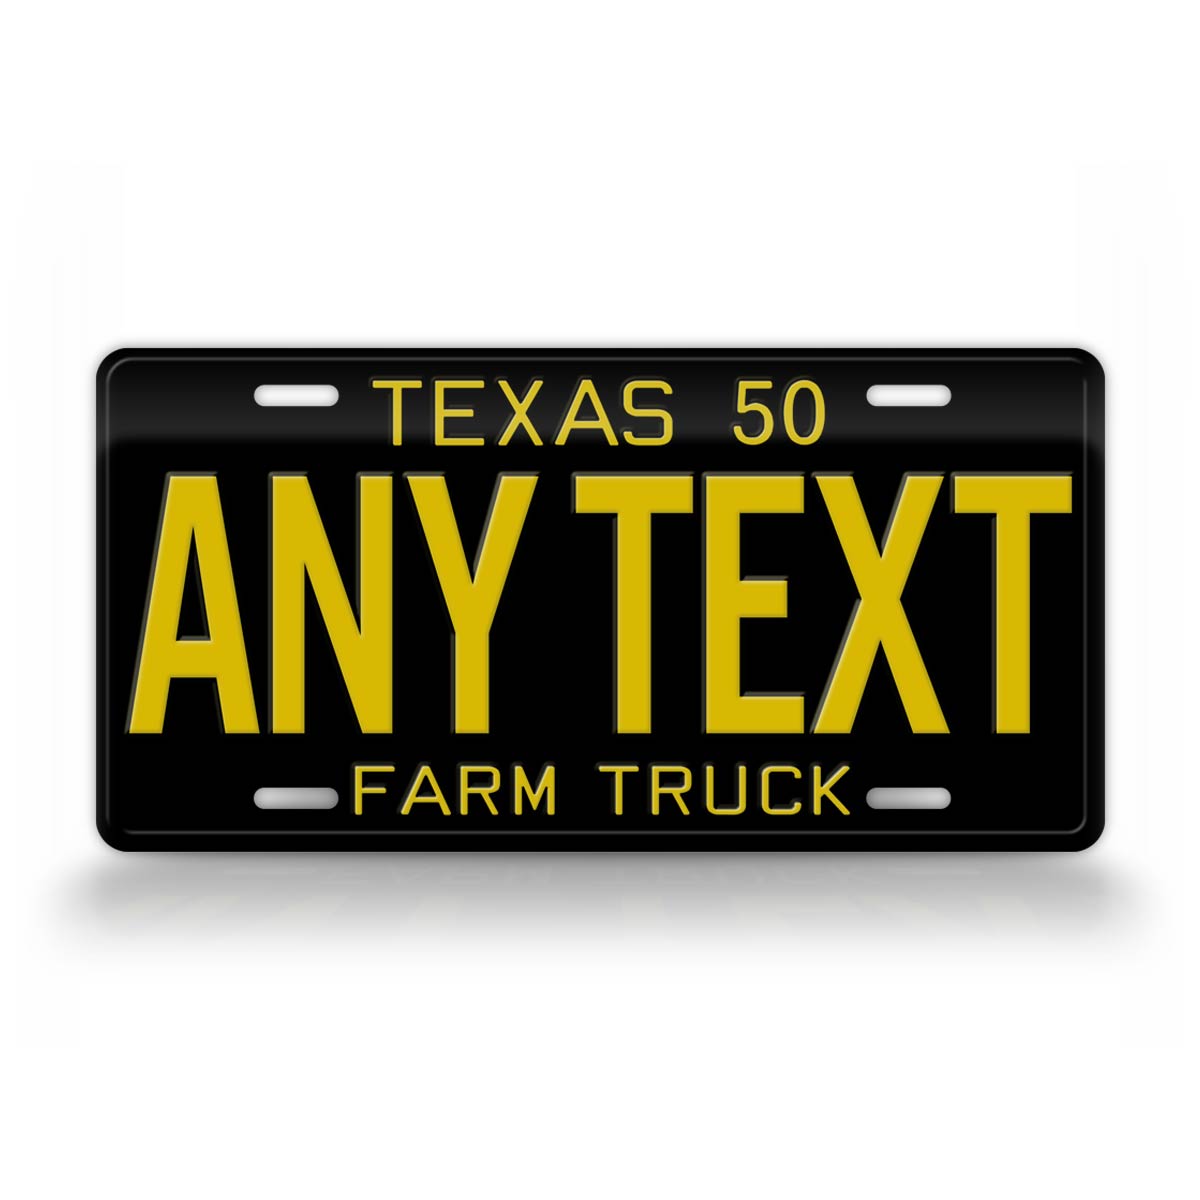 Vintage 1950 Style Texas Farm Truck License Plate